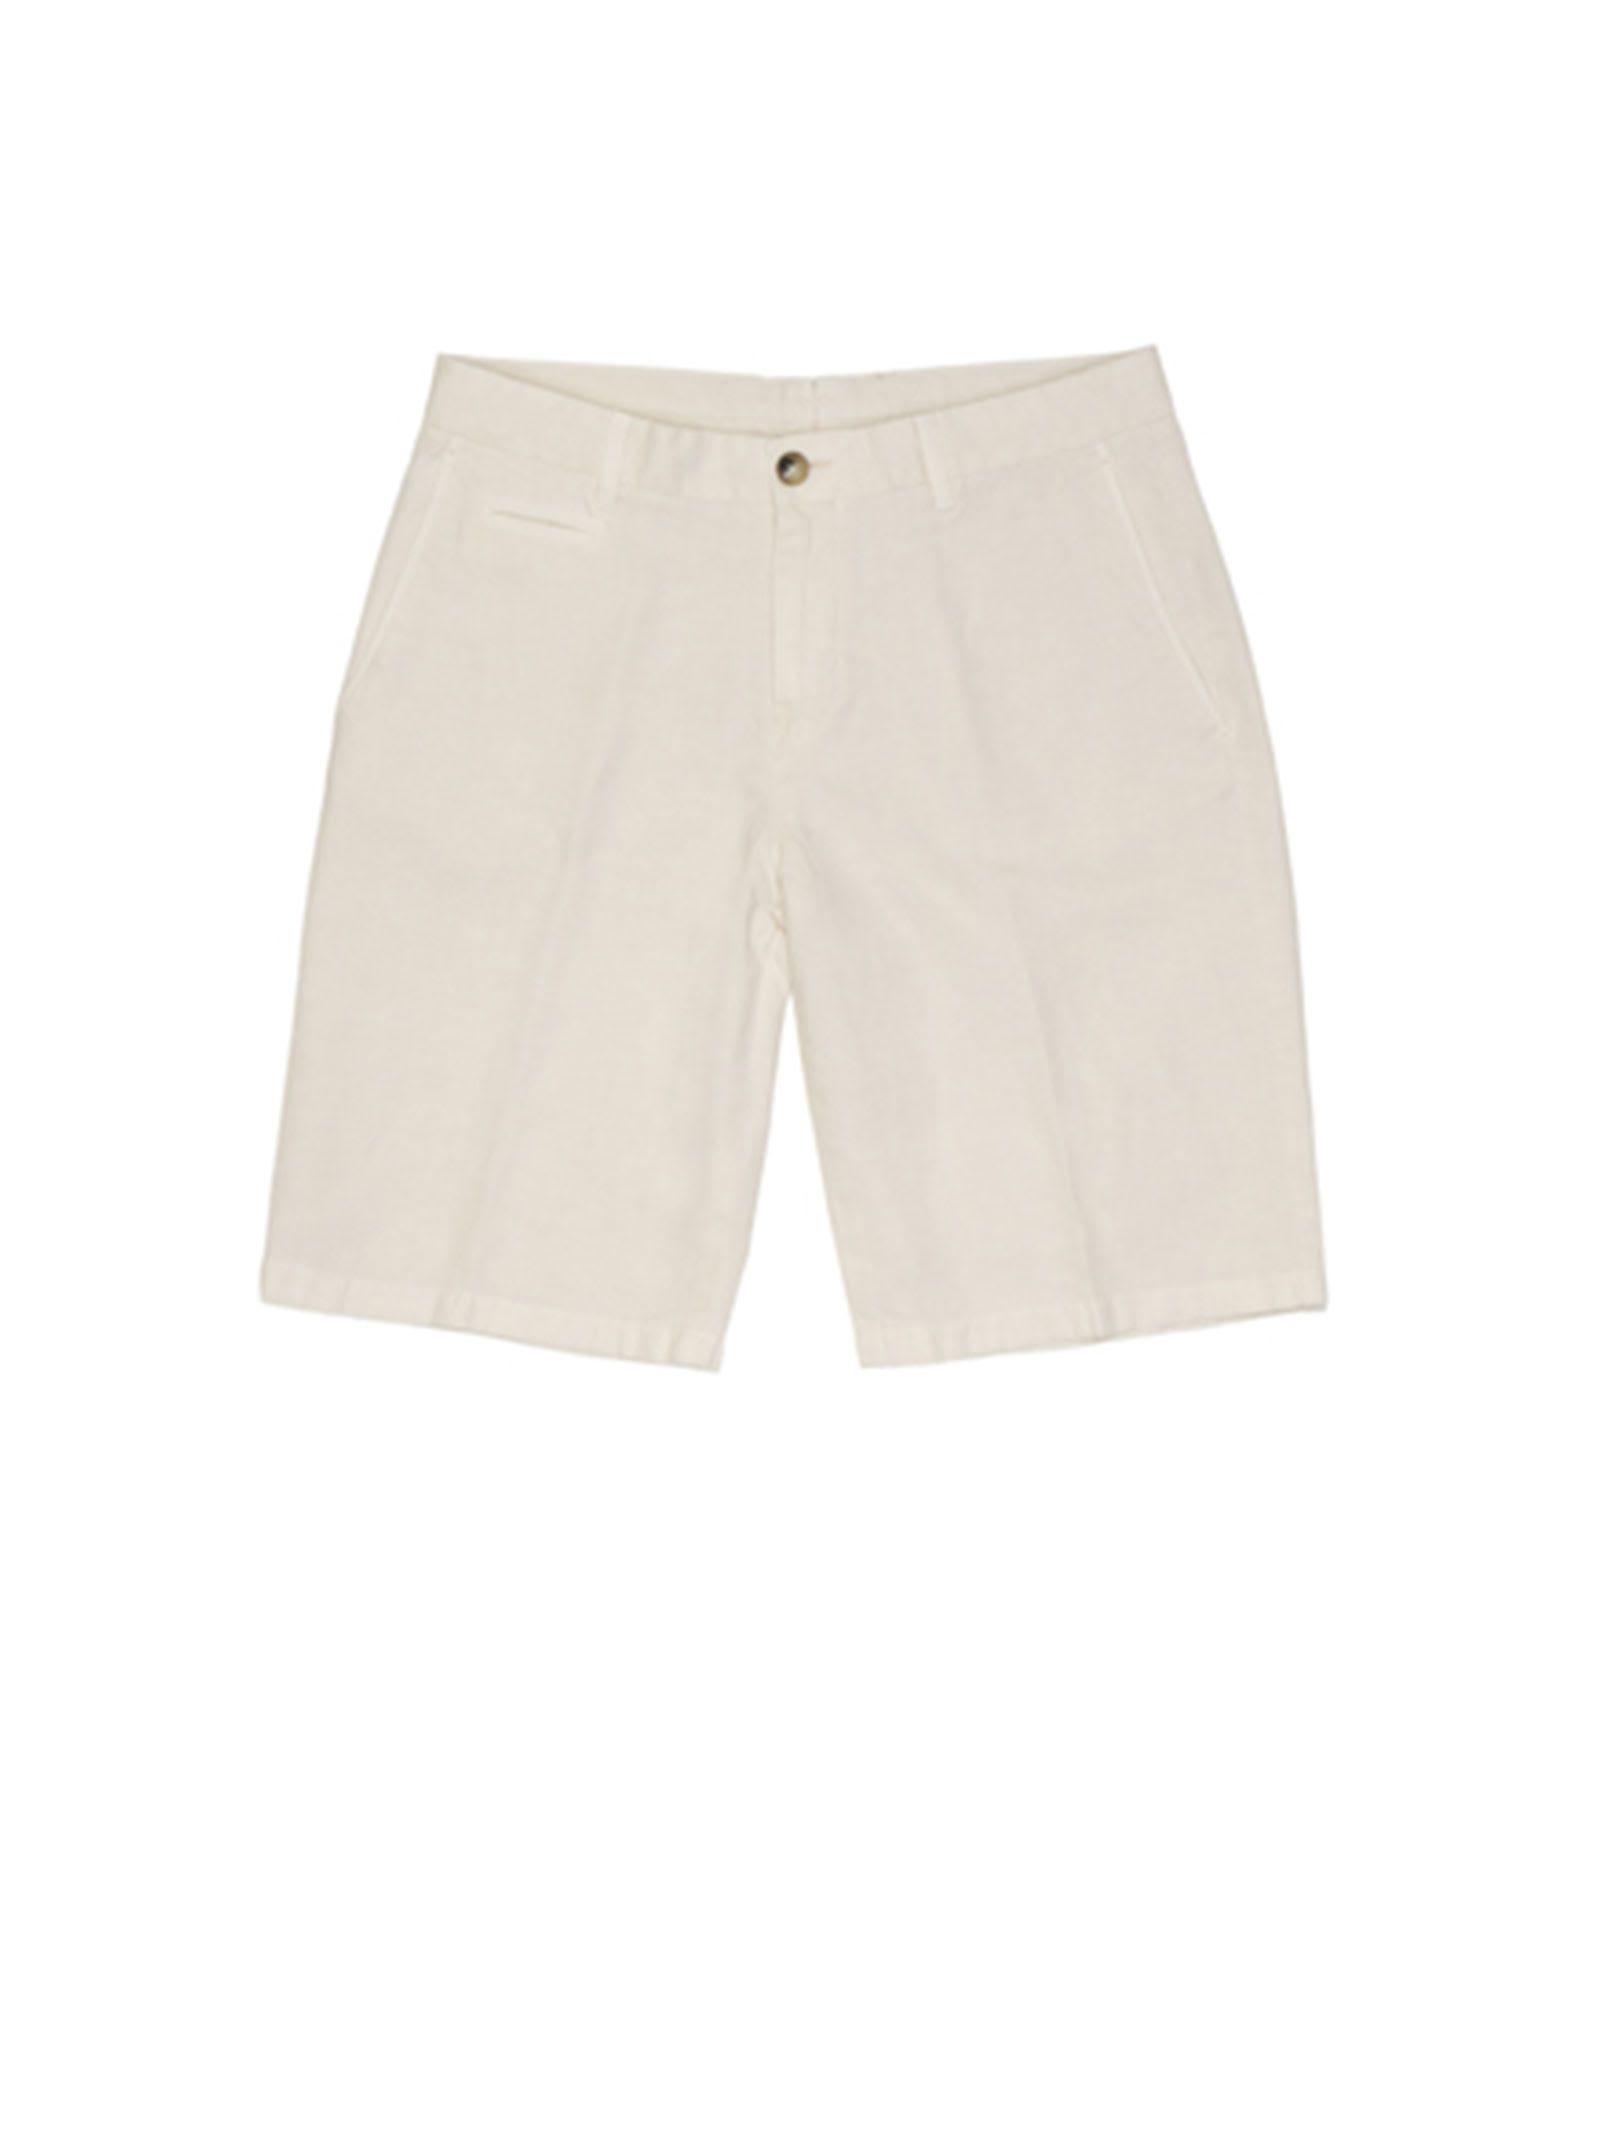 Altea White Cotton Bermuda Shorts